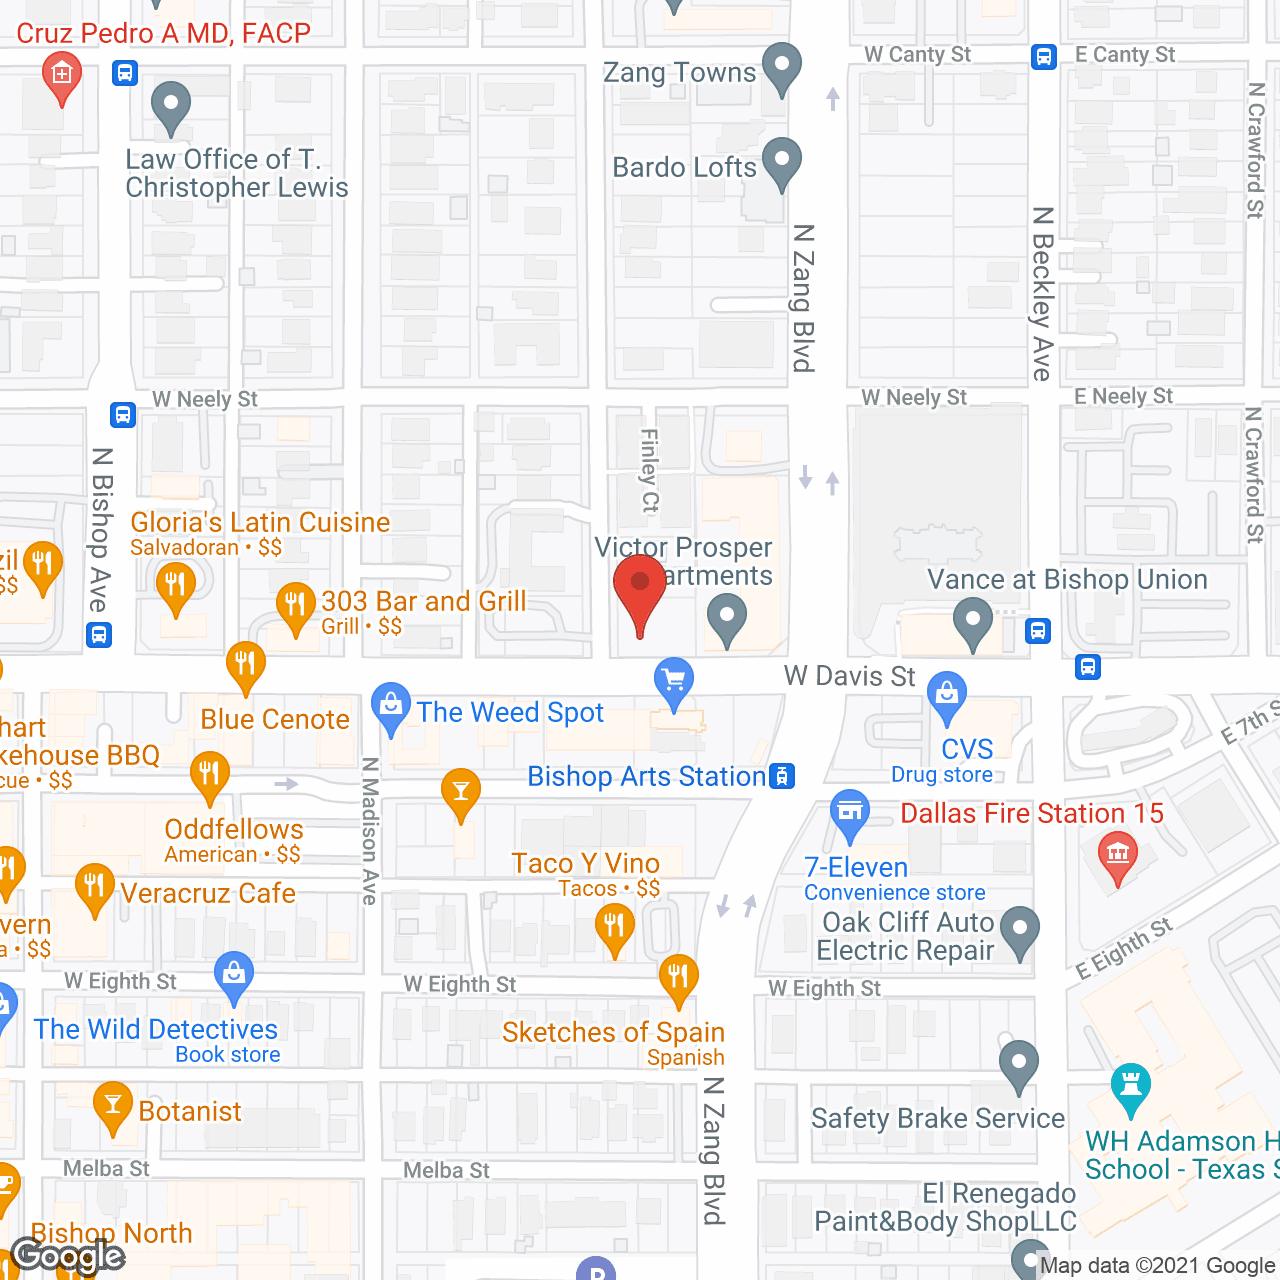 Crystal Hill Nursing Home in google map